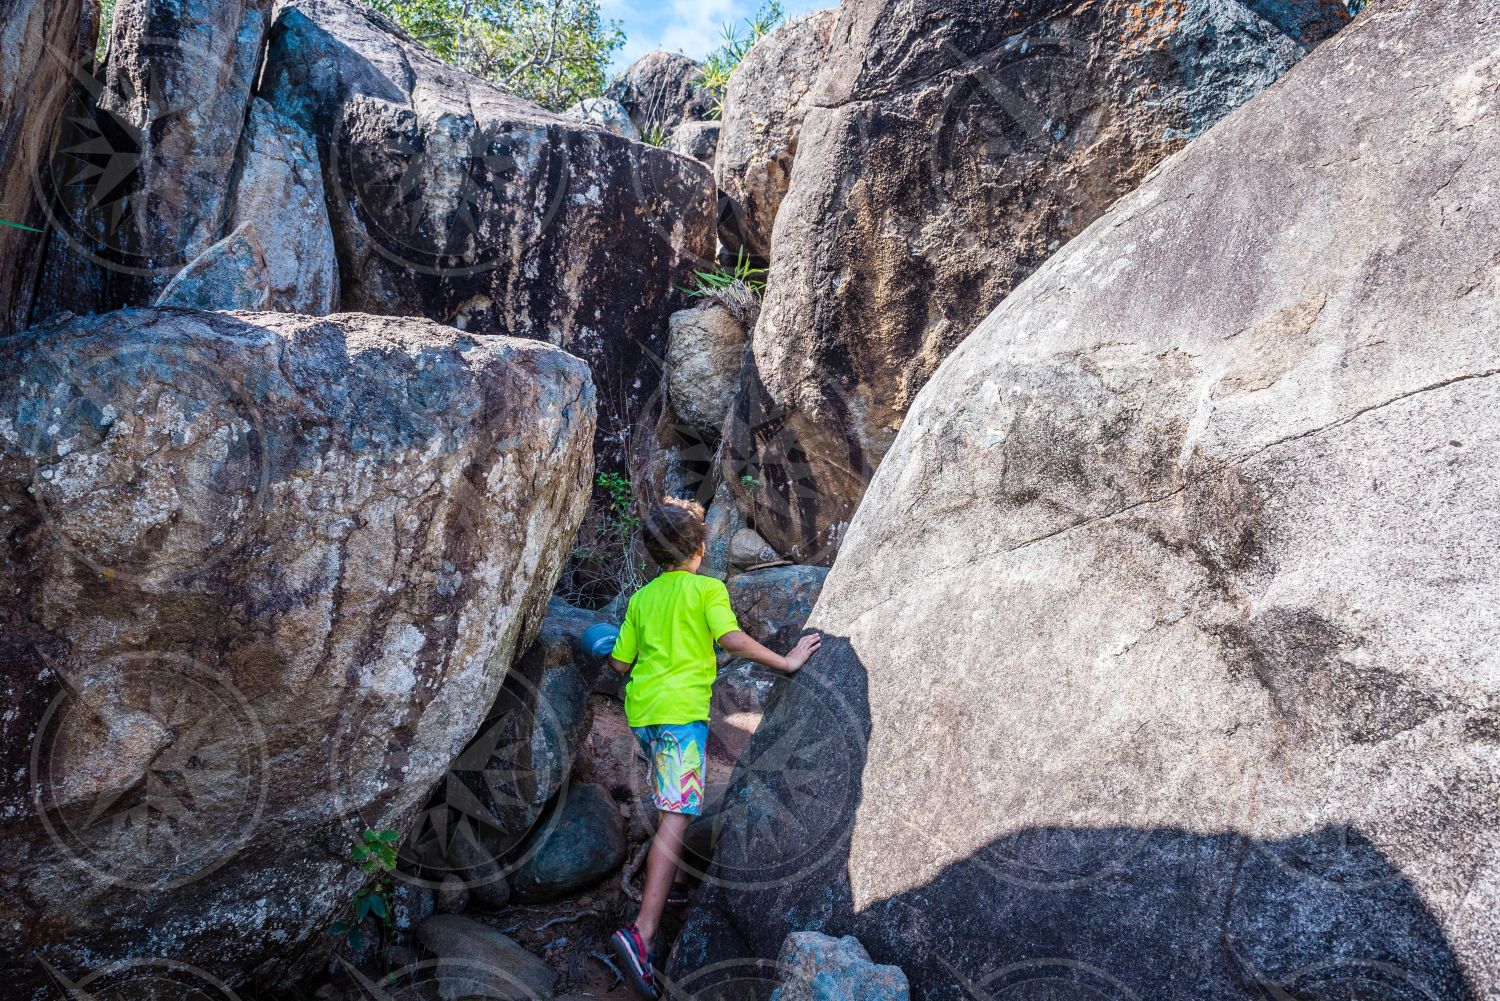 Young boy hiking through rocks